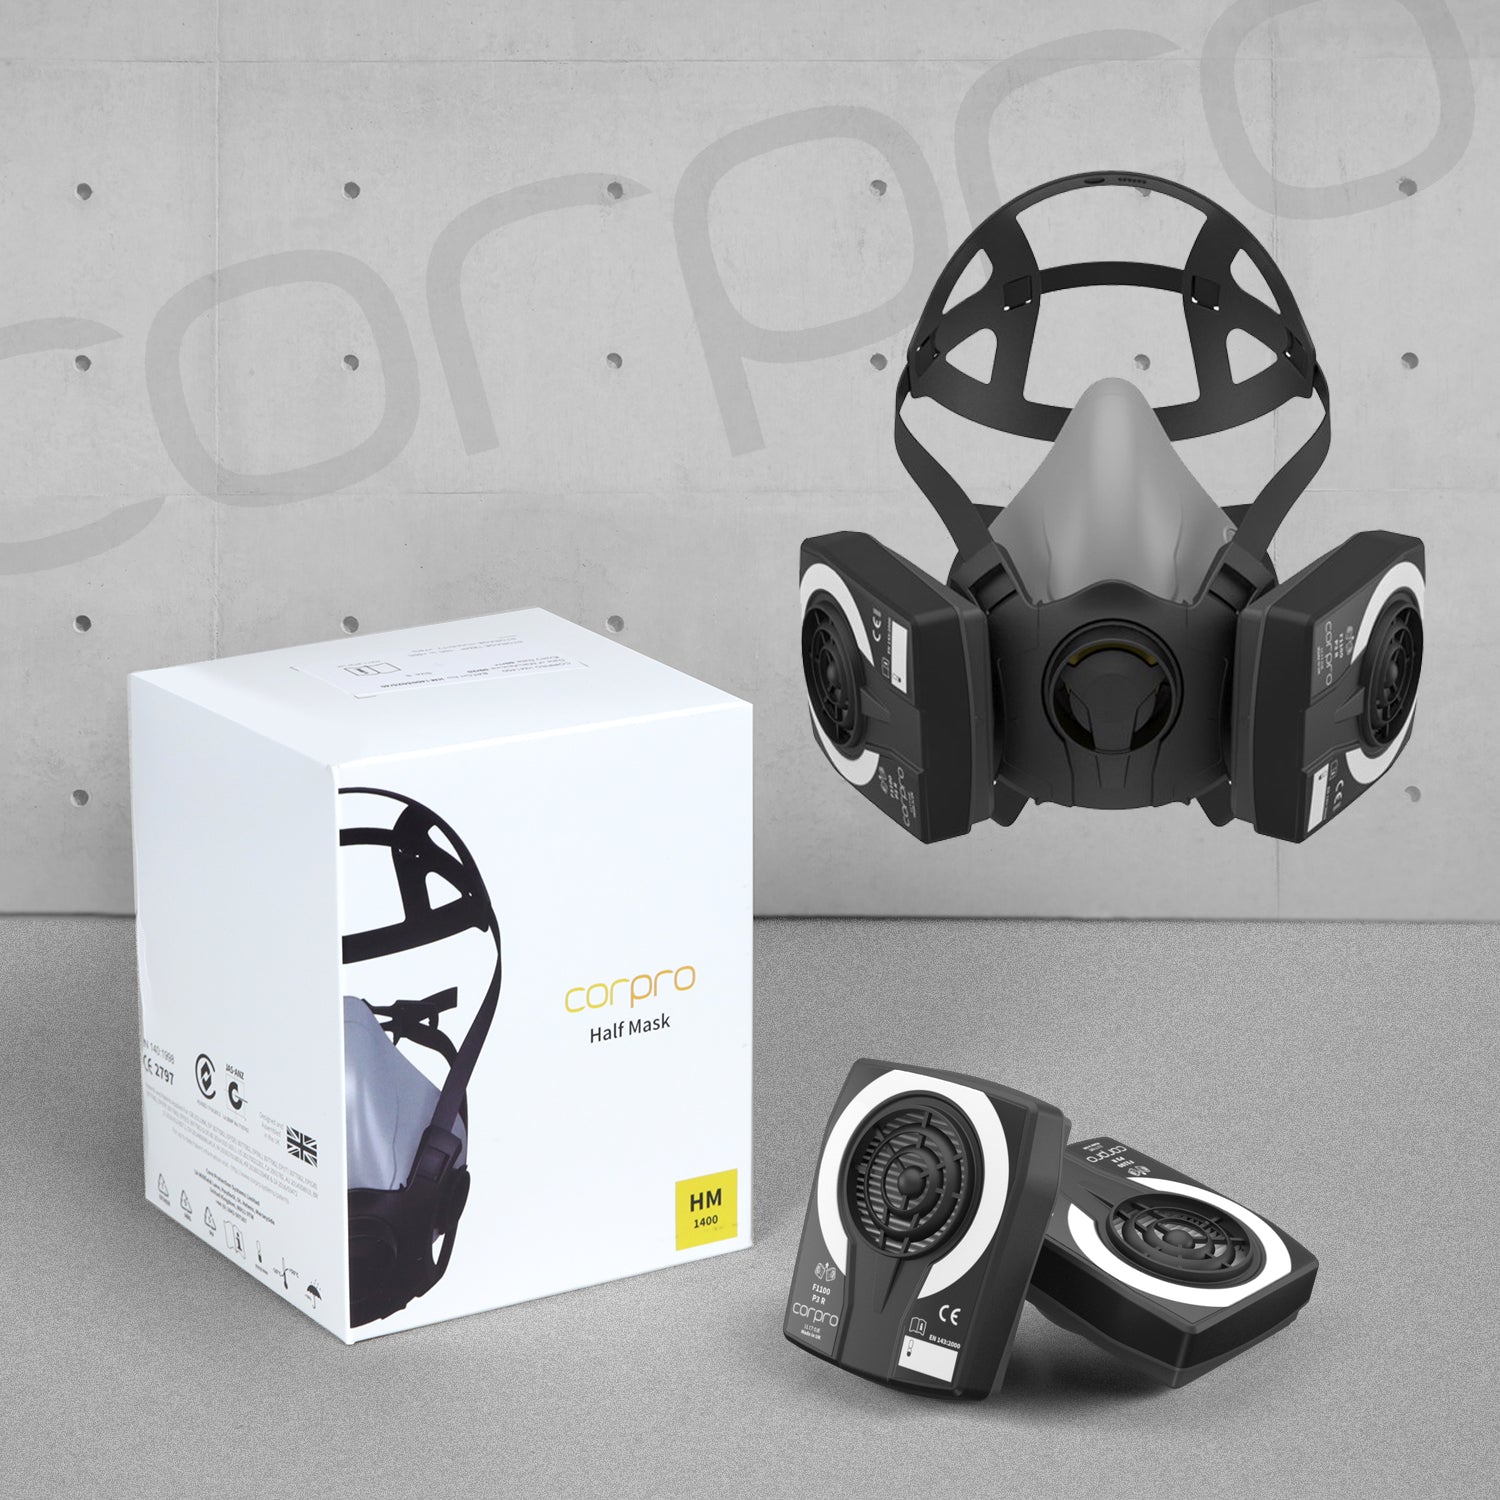 Corpro - Half Face Mask HM1400 - Small